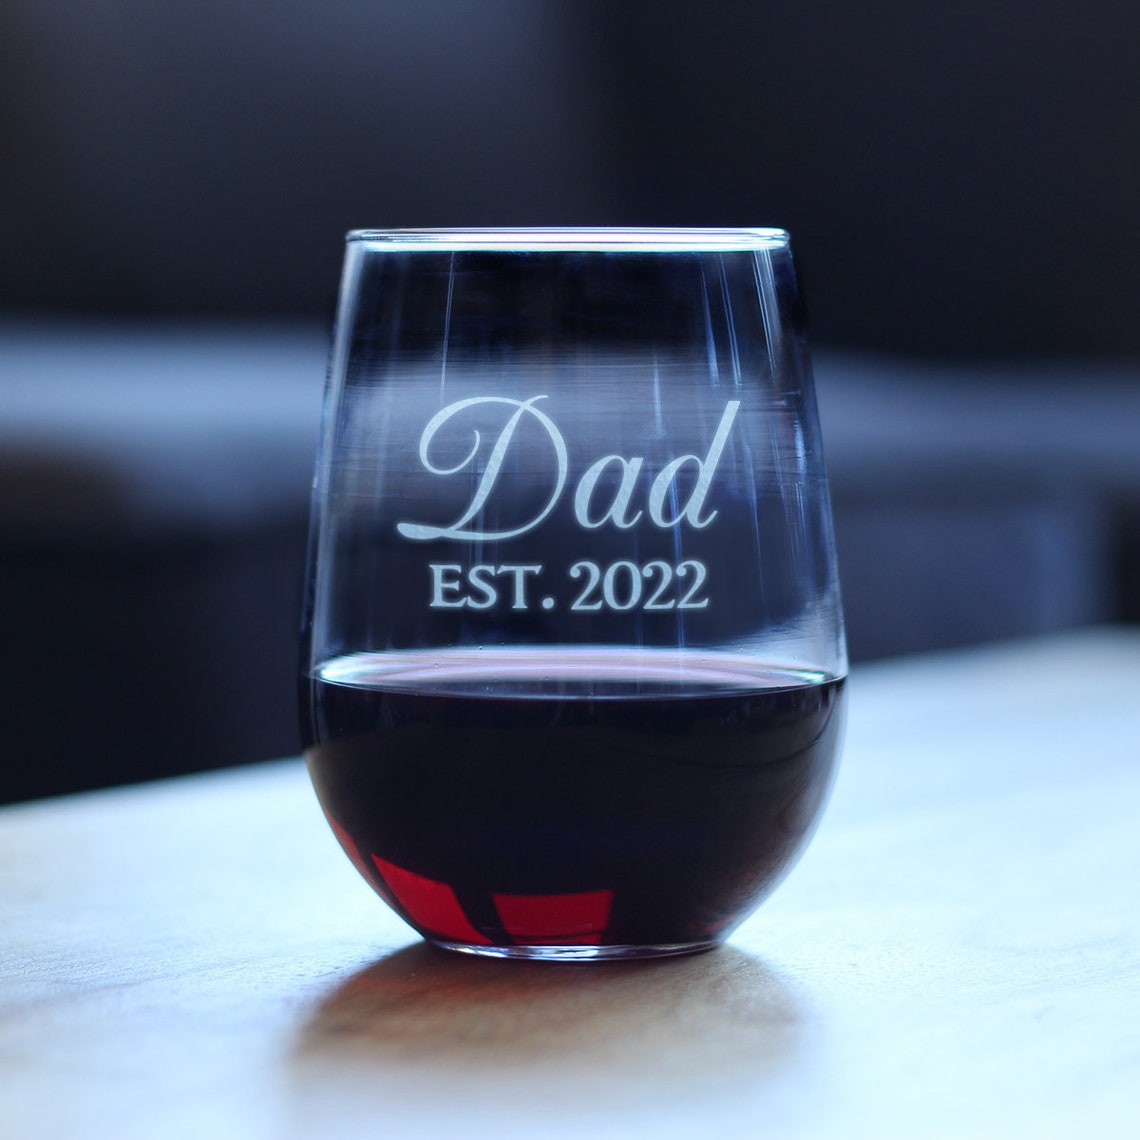 Dad Est. 2022 Decorative Stemless Wine Glass Large 17